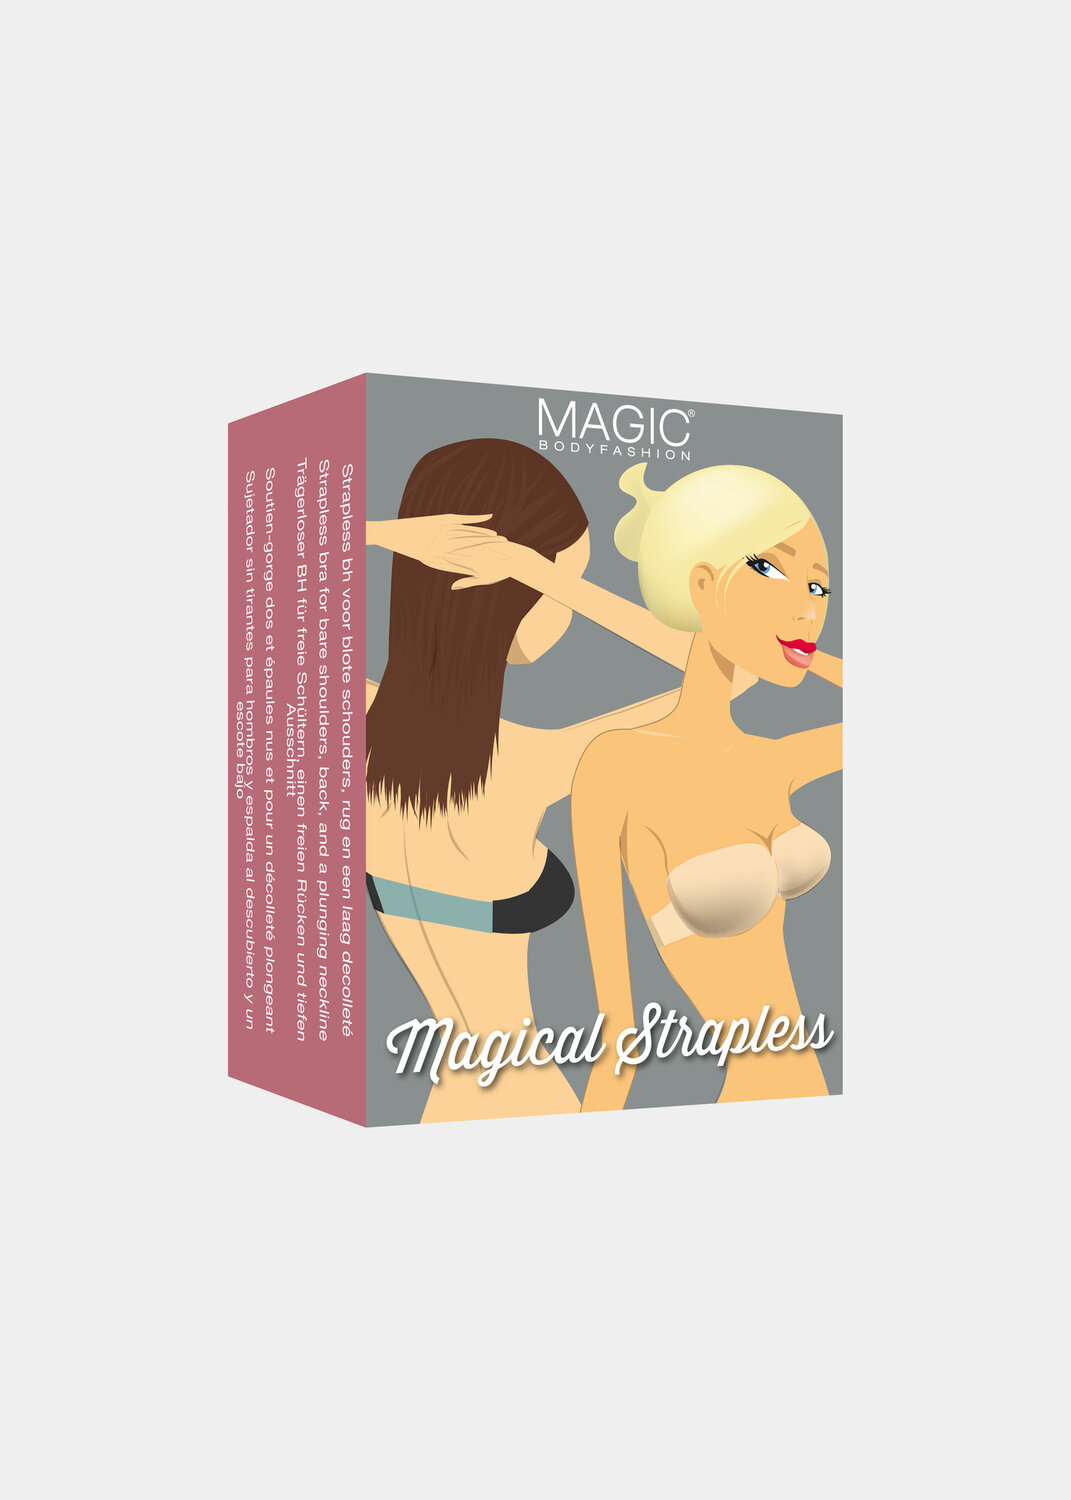 MAGIC Bodyfashion - Magical Strapless